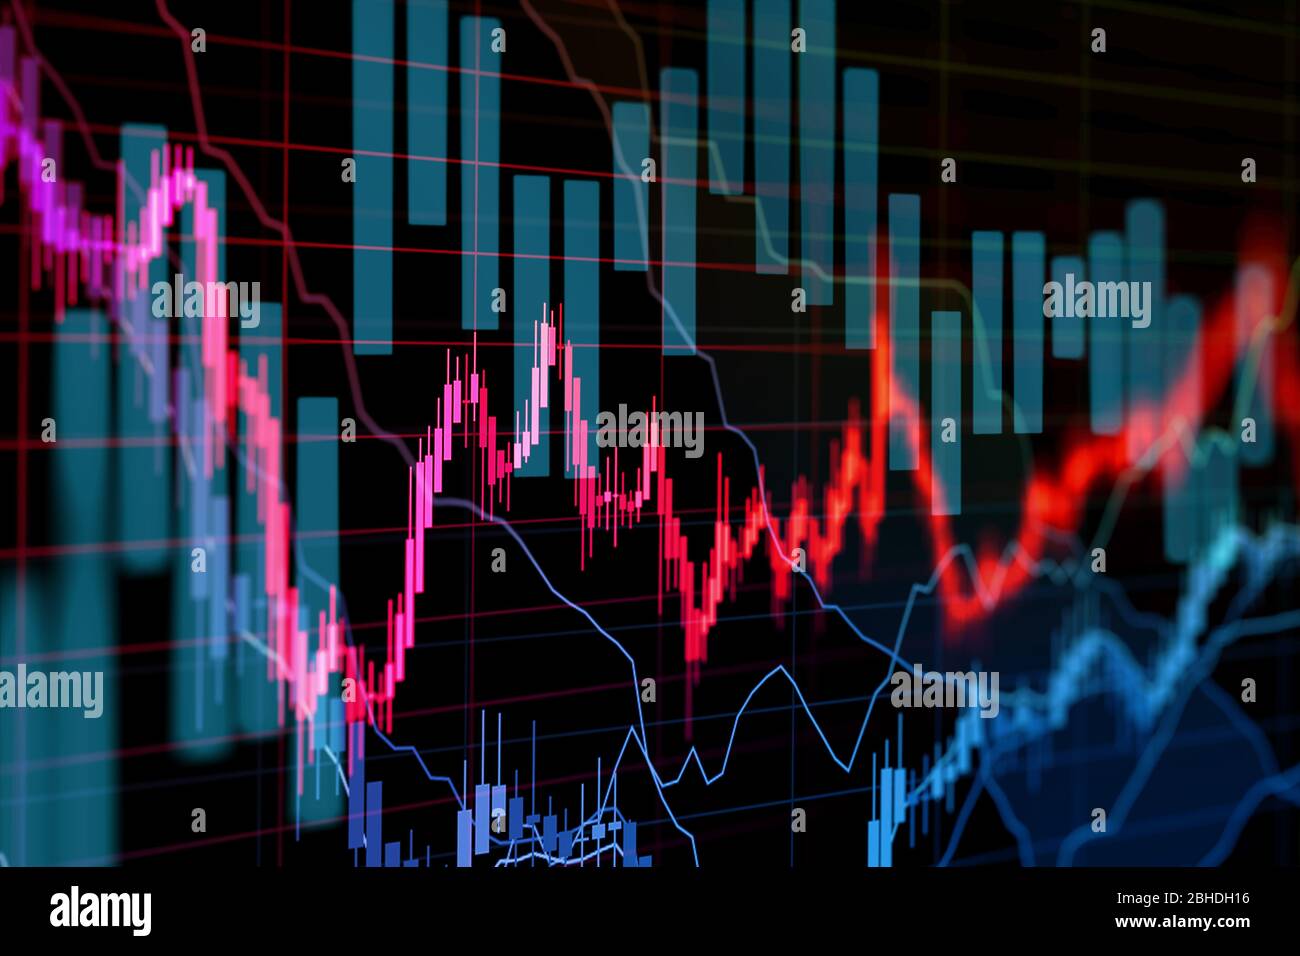 stock market charts, trading concept Stock Photo